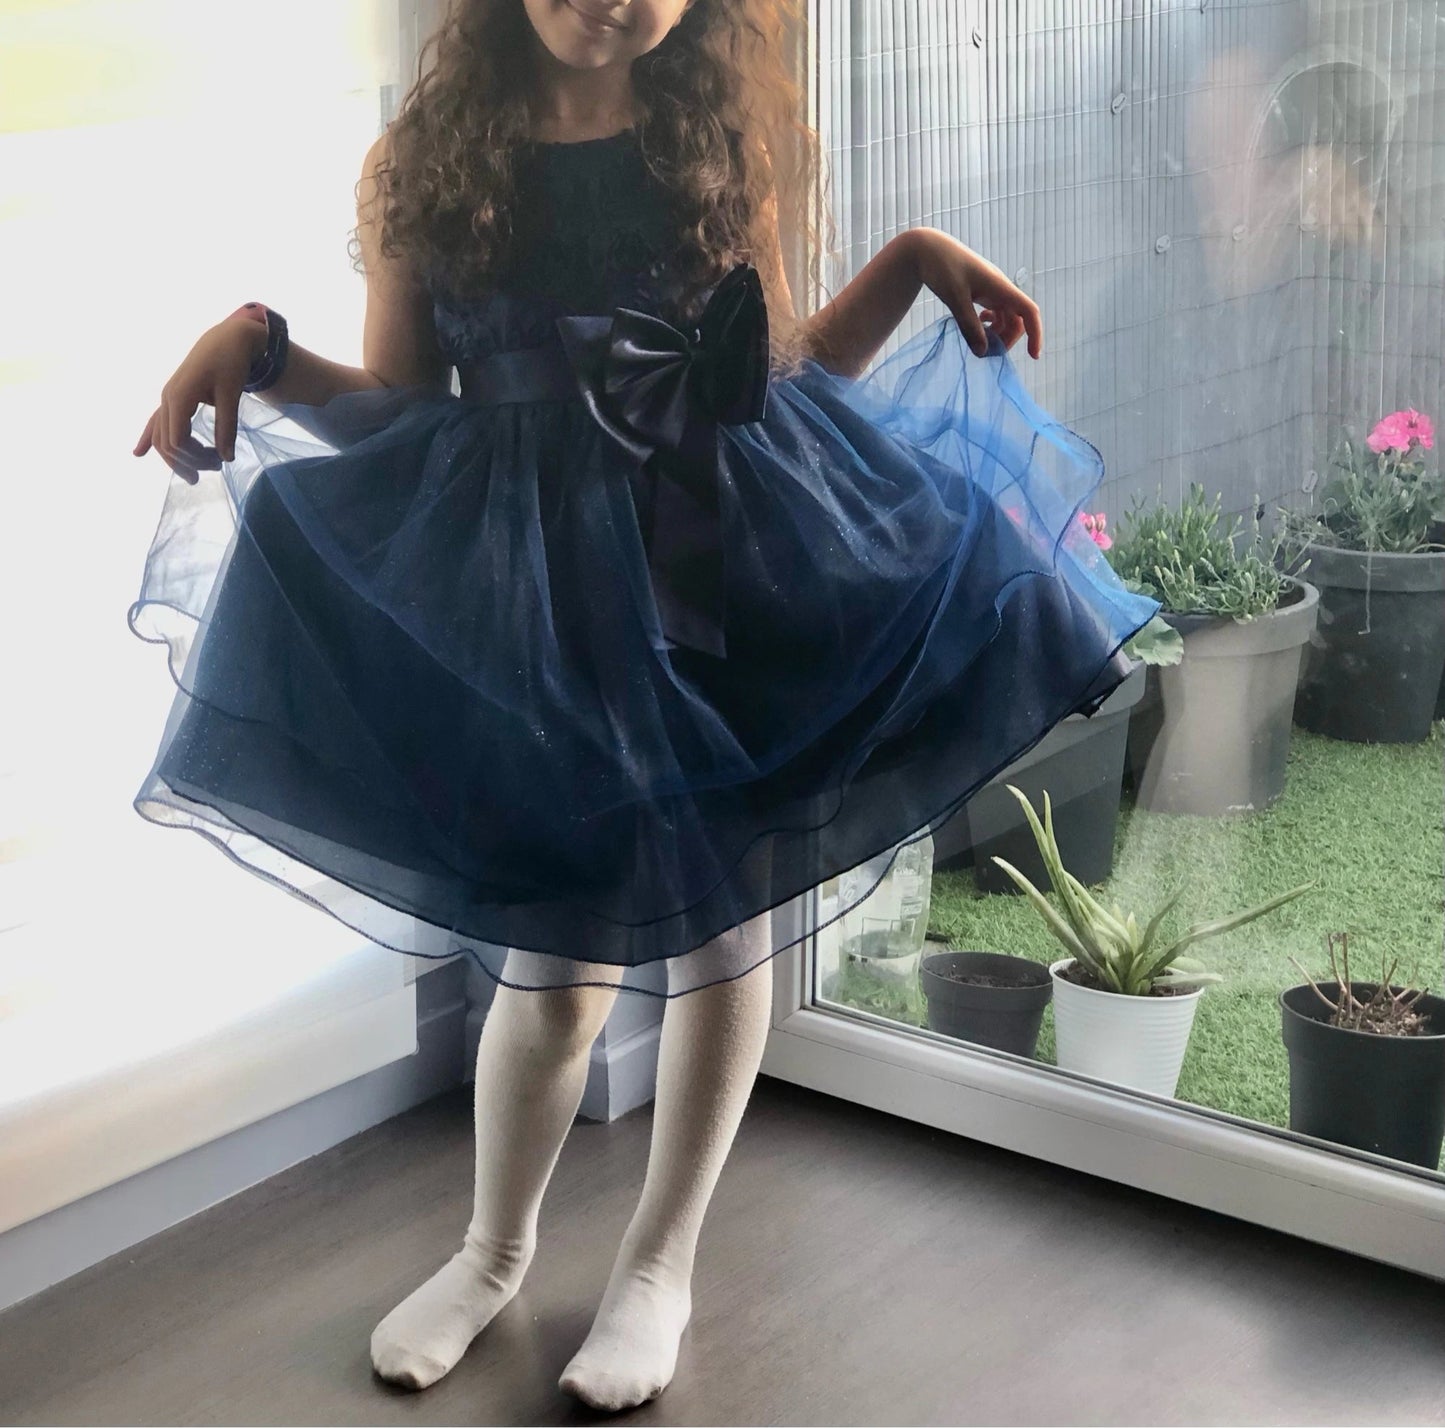 Girls Children Toddler Sleeveless Lace 3D Flower Tutu Princess Dresses Baby & Toddler Dresses jehouze 